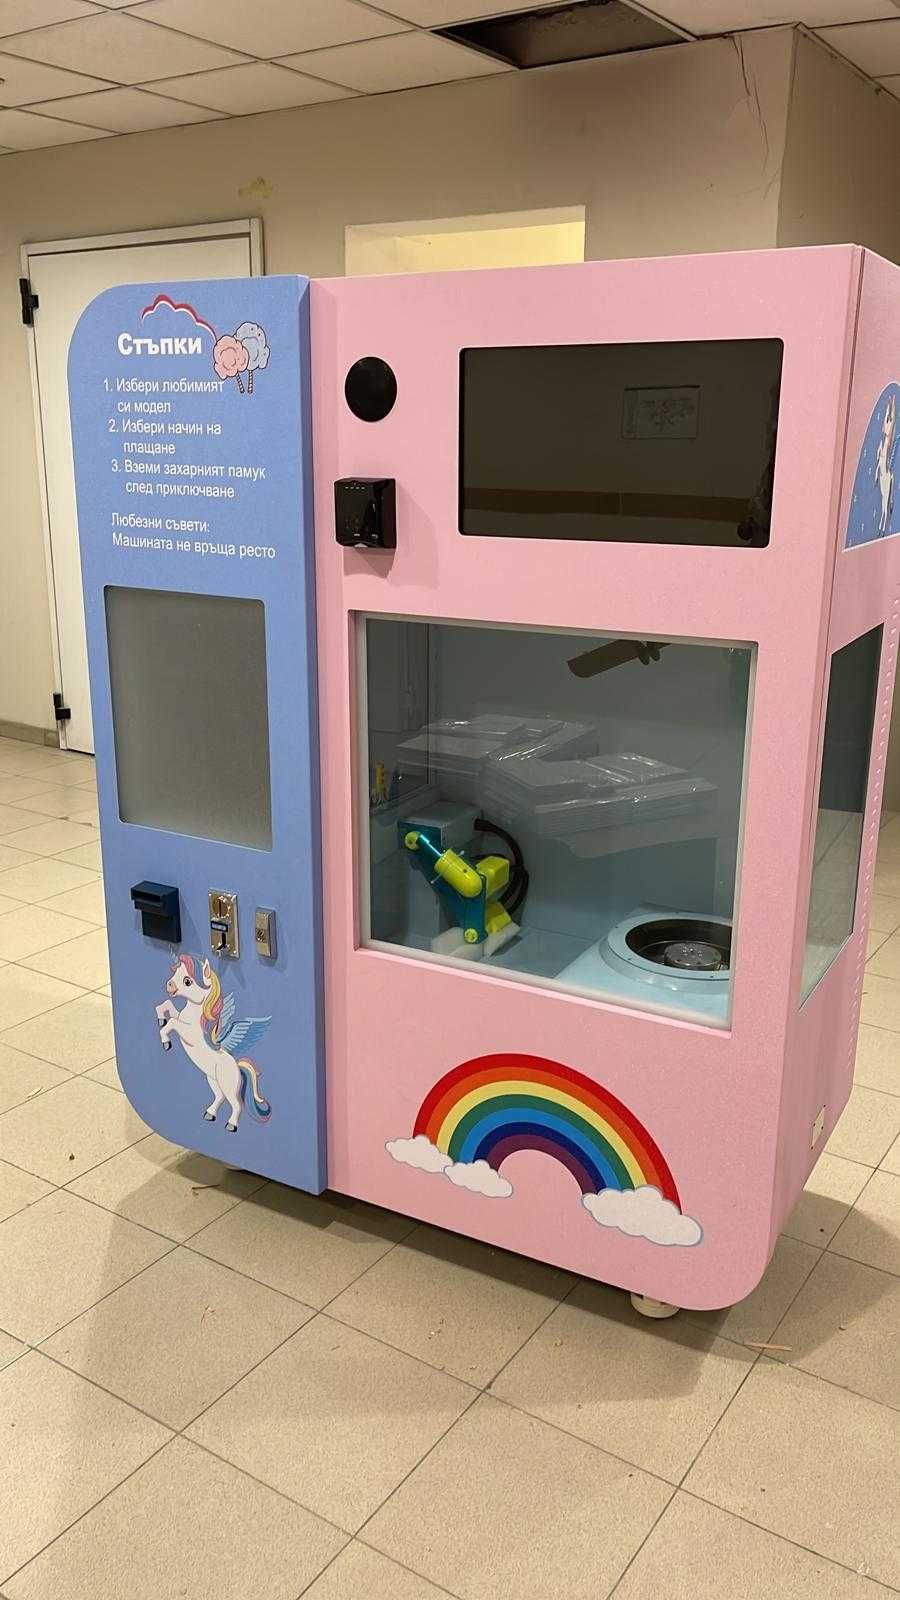 Автомат за захарен памук/
Cotton candy vending machine